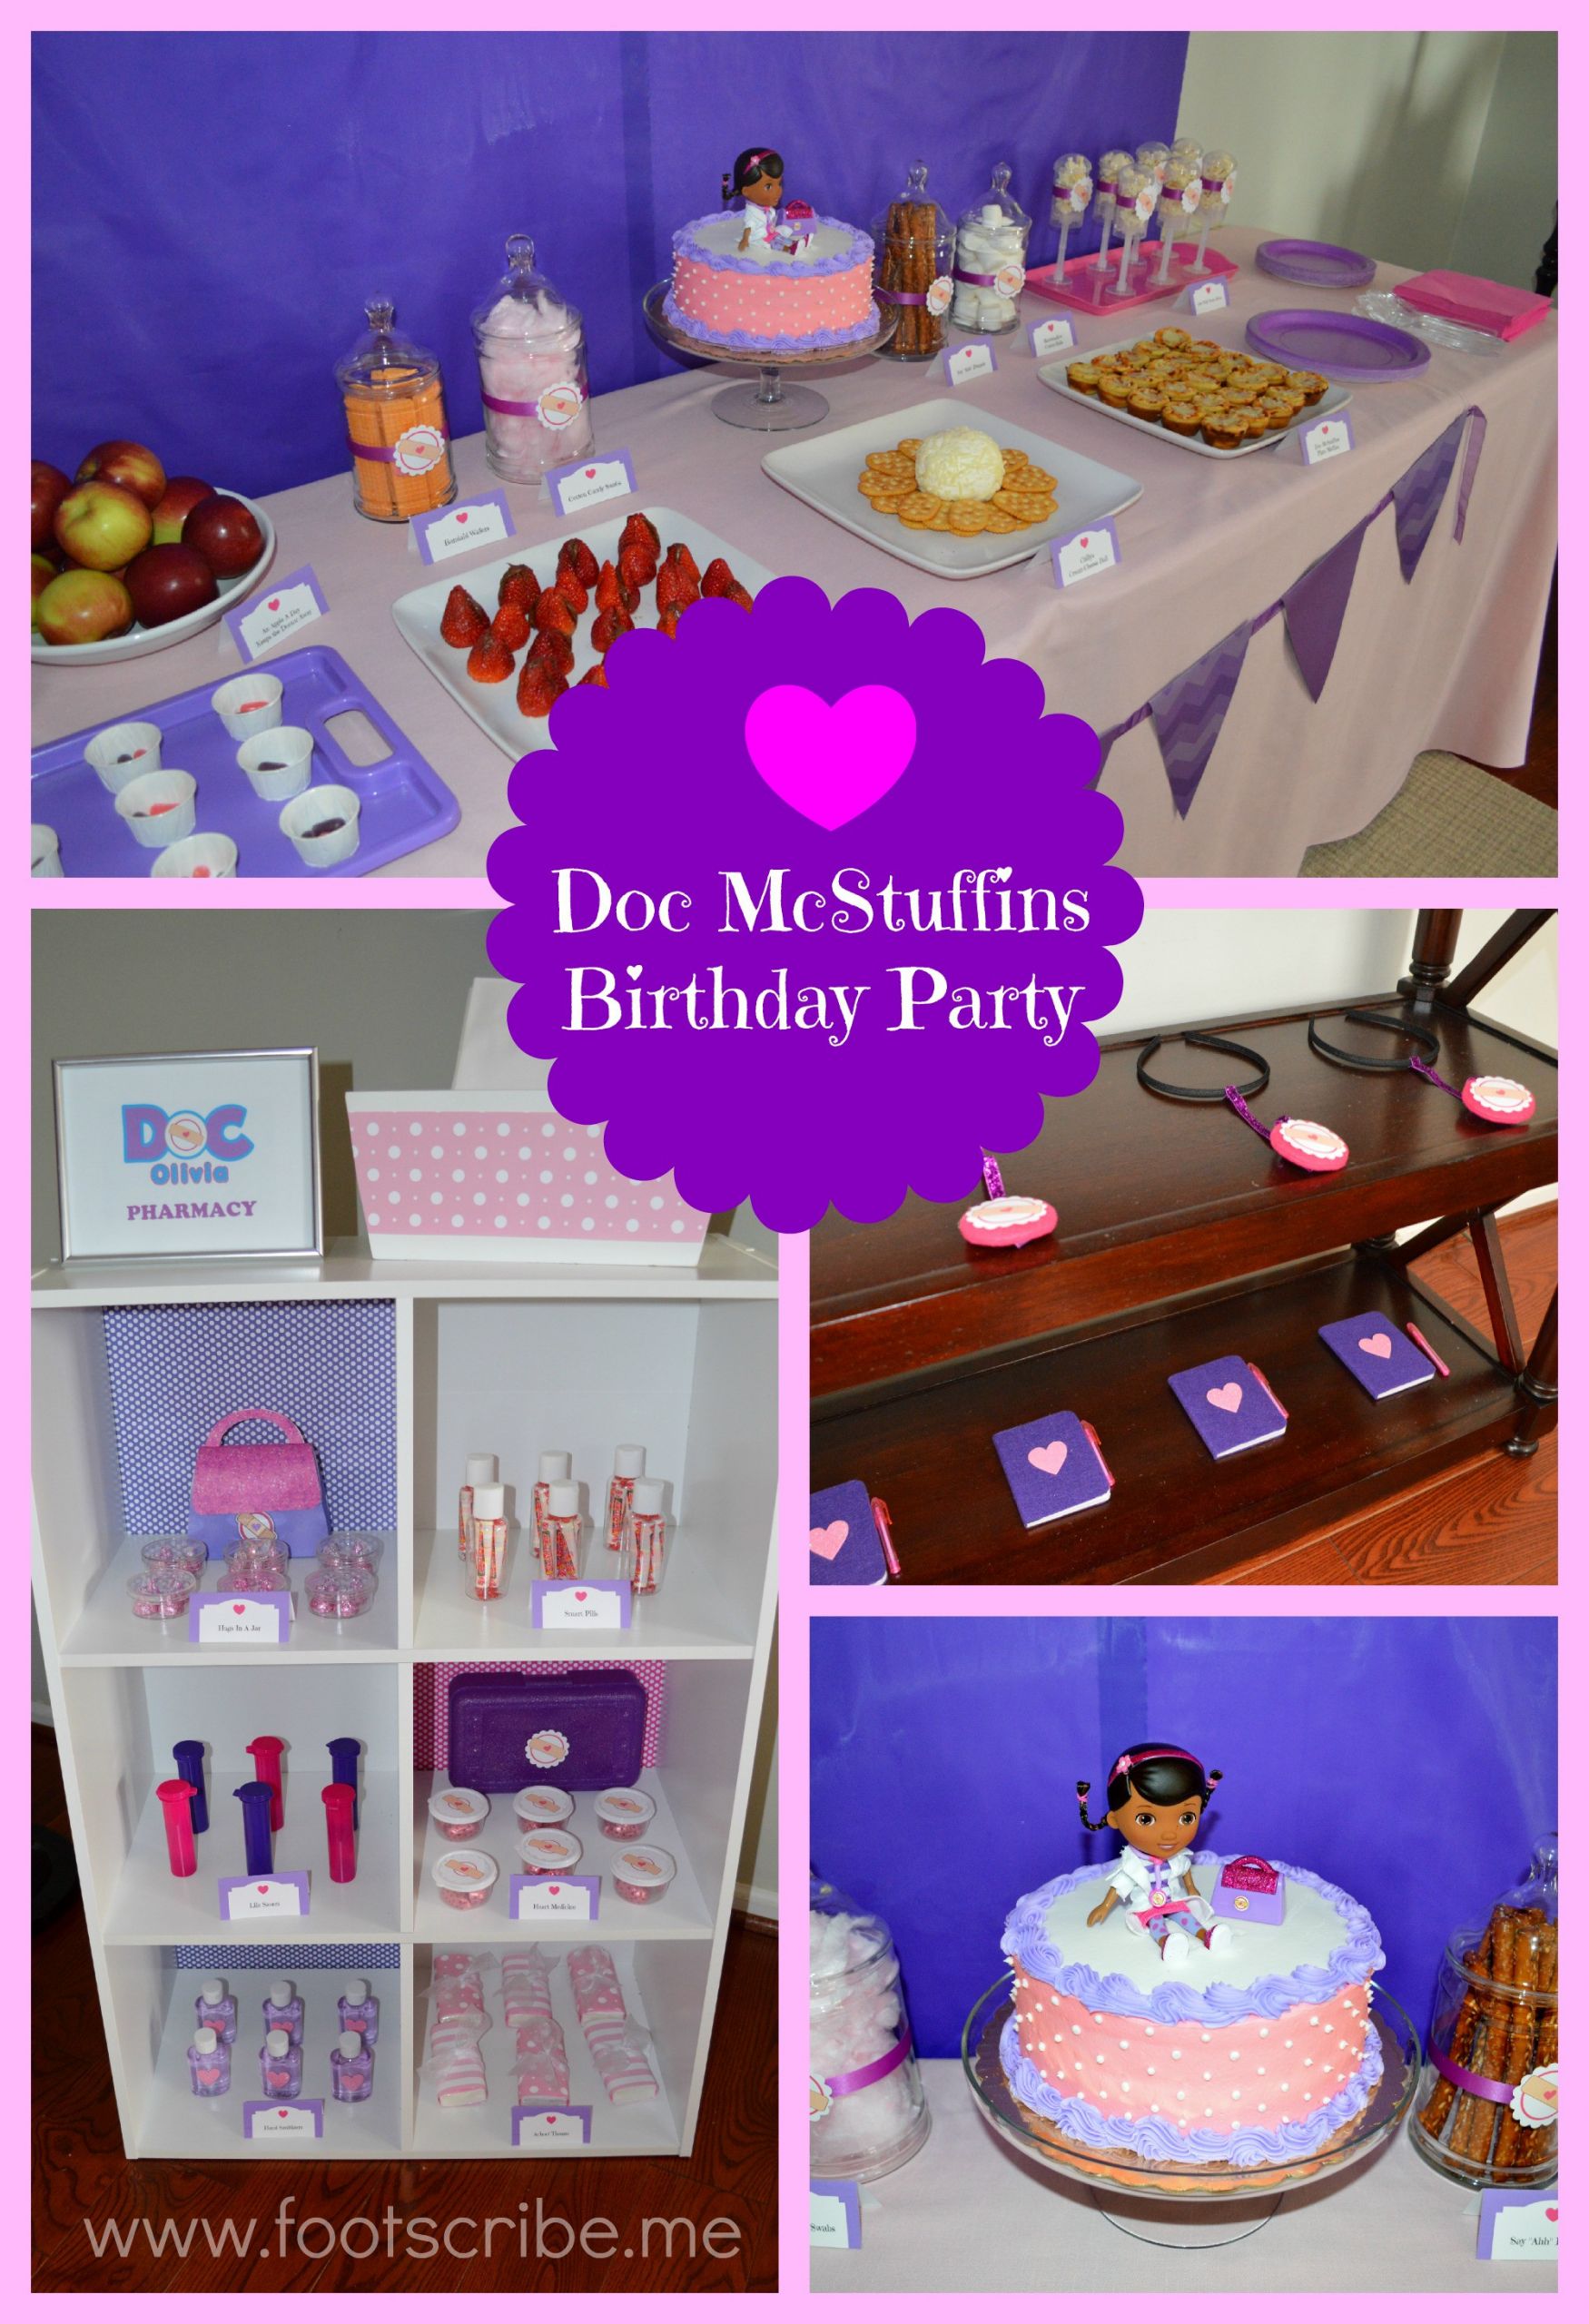 Doc Mcstuffins Birthday Party Decorations
 Doc McStuffins Foot Scribe